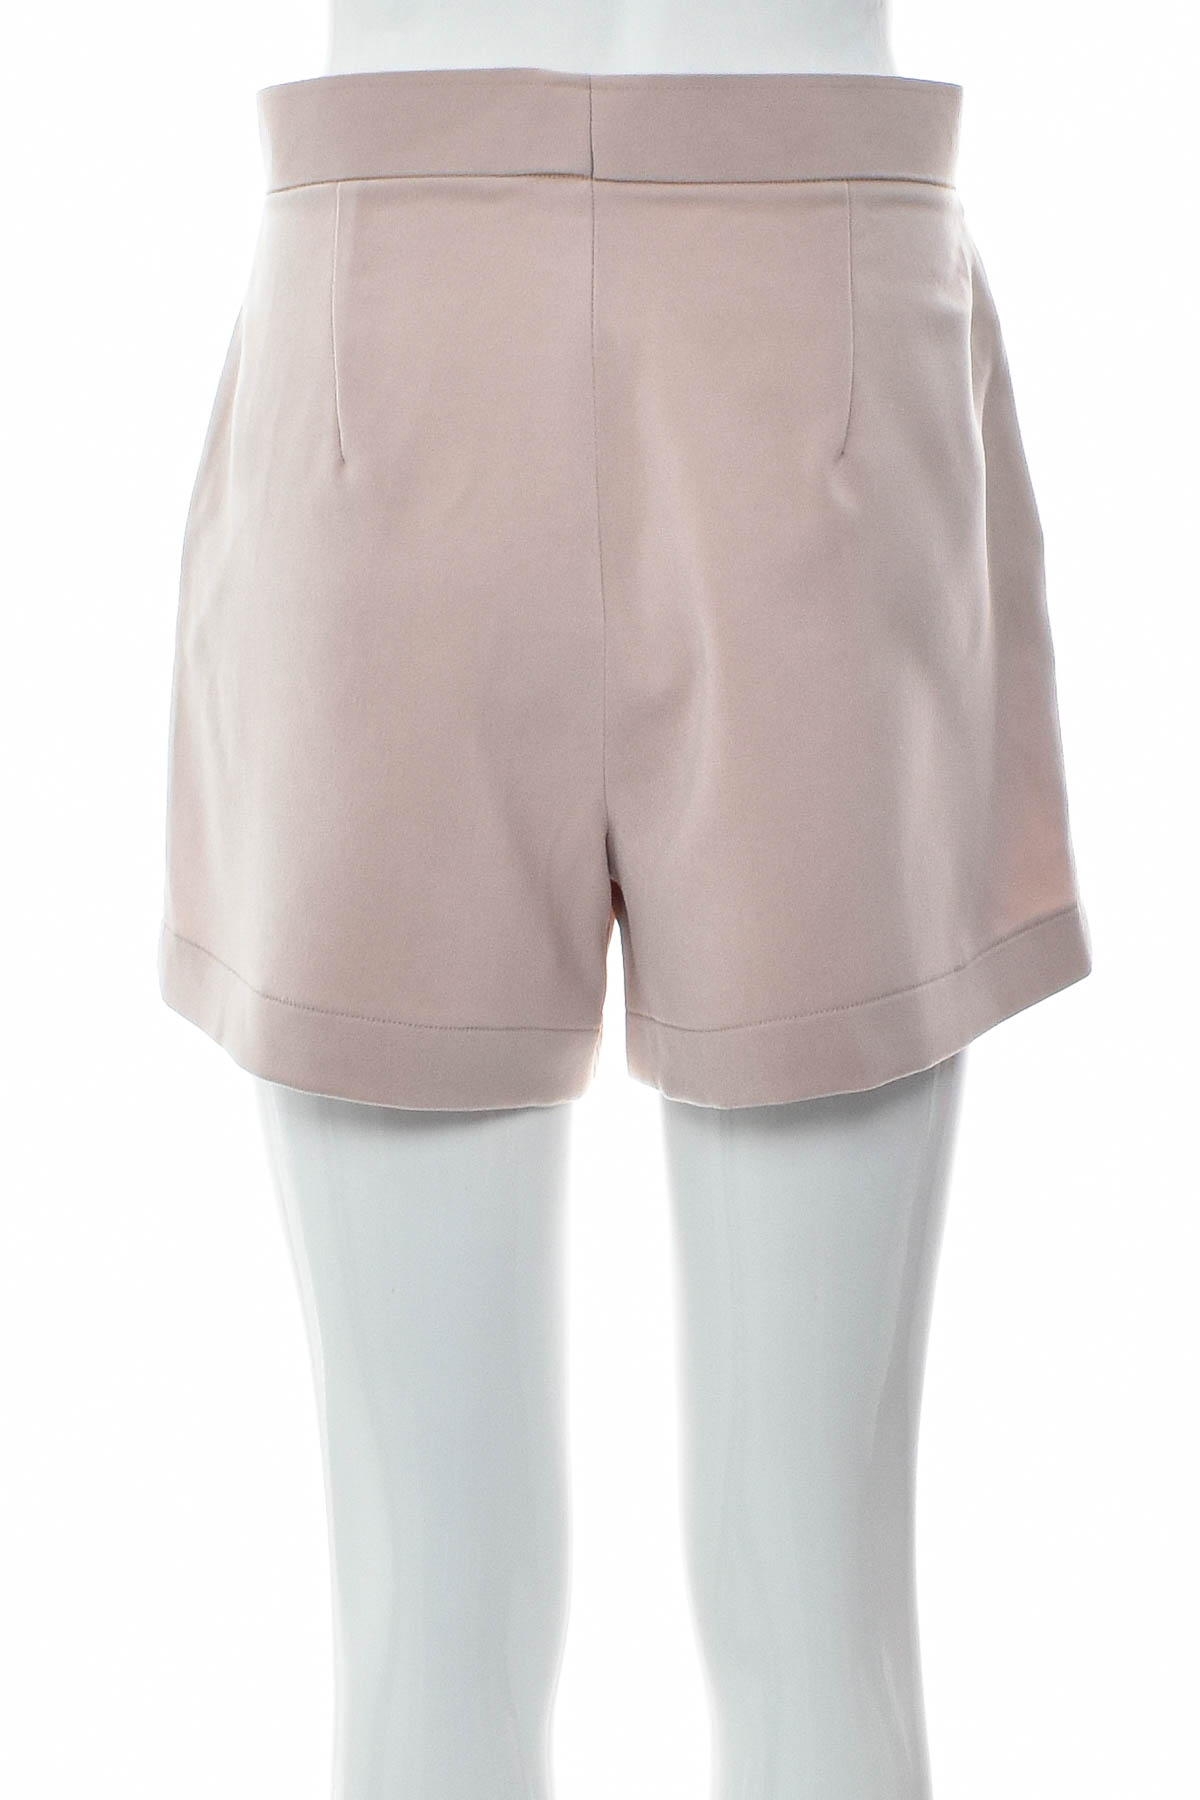 Female shorts - MR. & MS. - 1